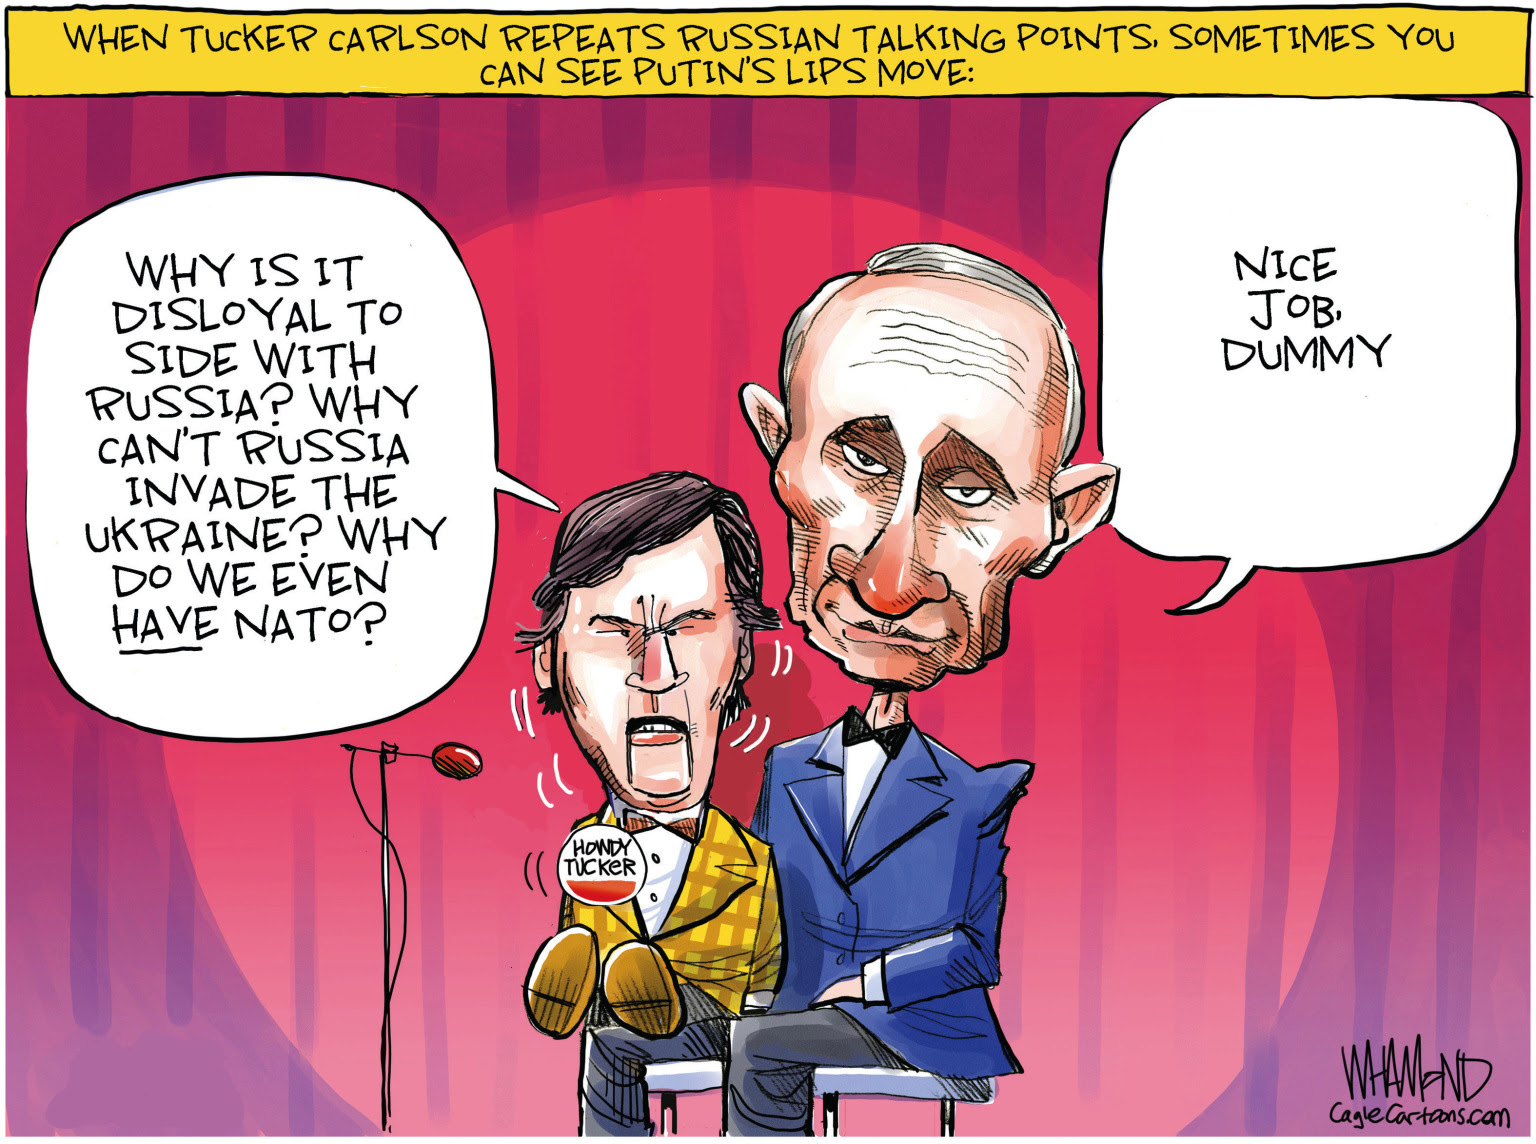 Tucker Carlson praises Putin